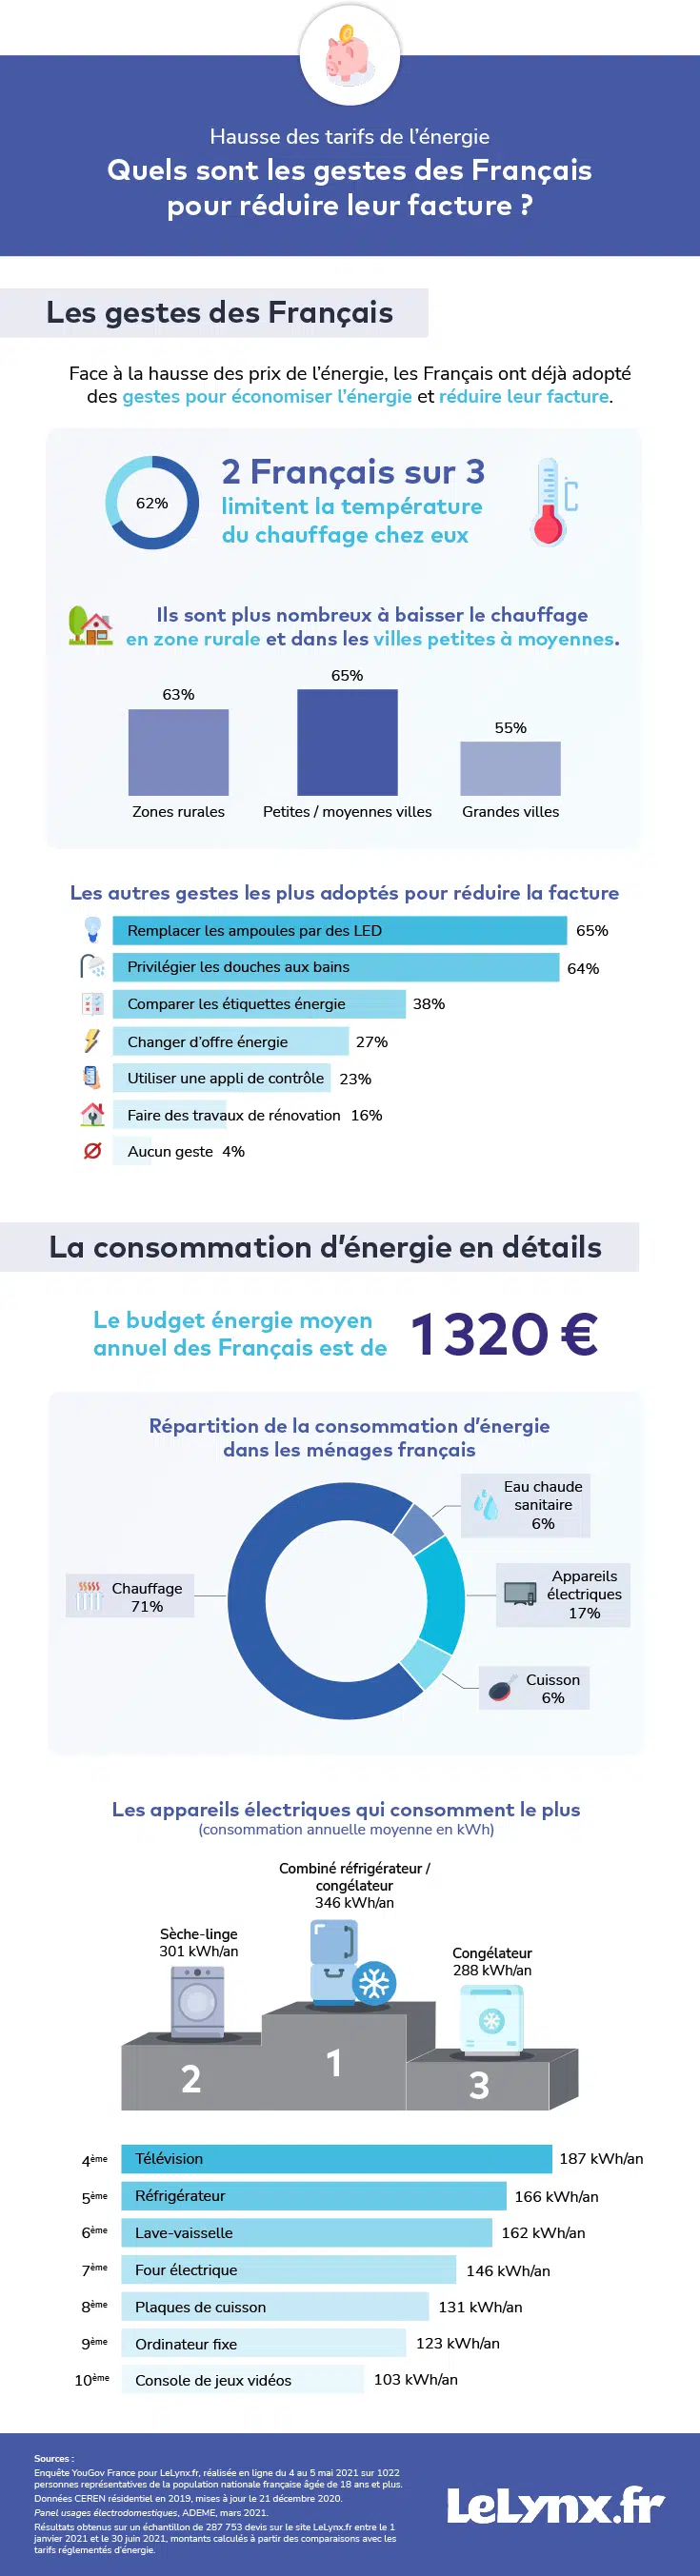 infographie-lelynx-gestes-economies-energie